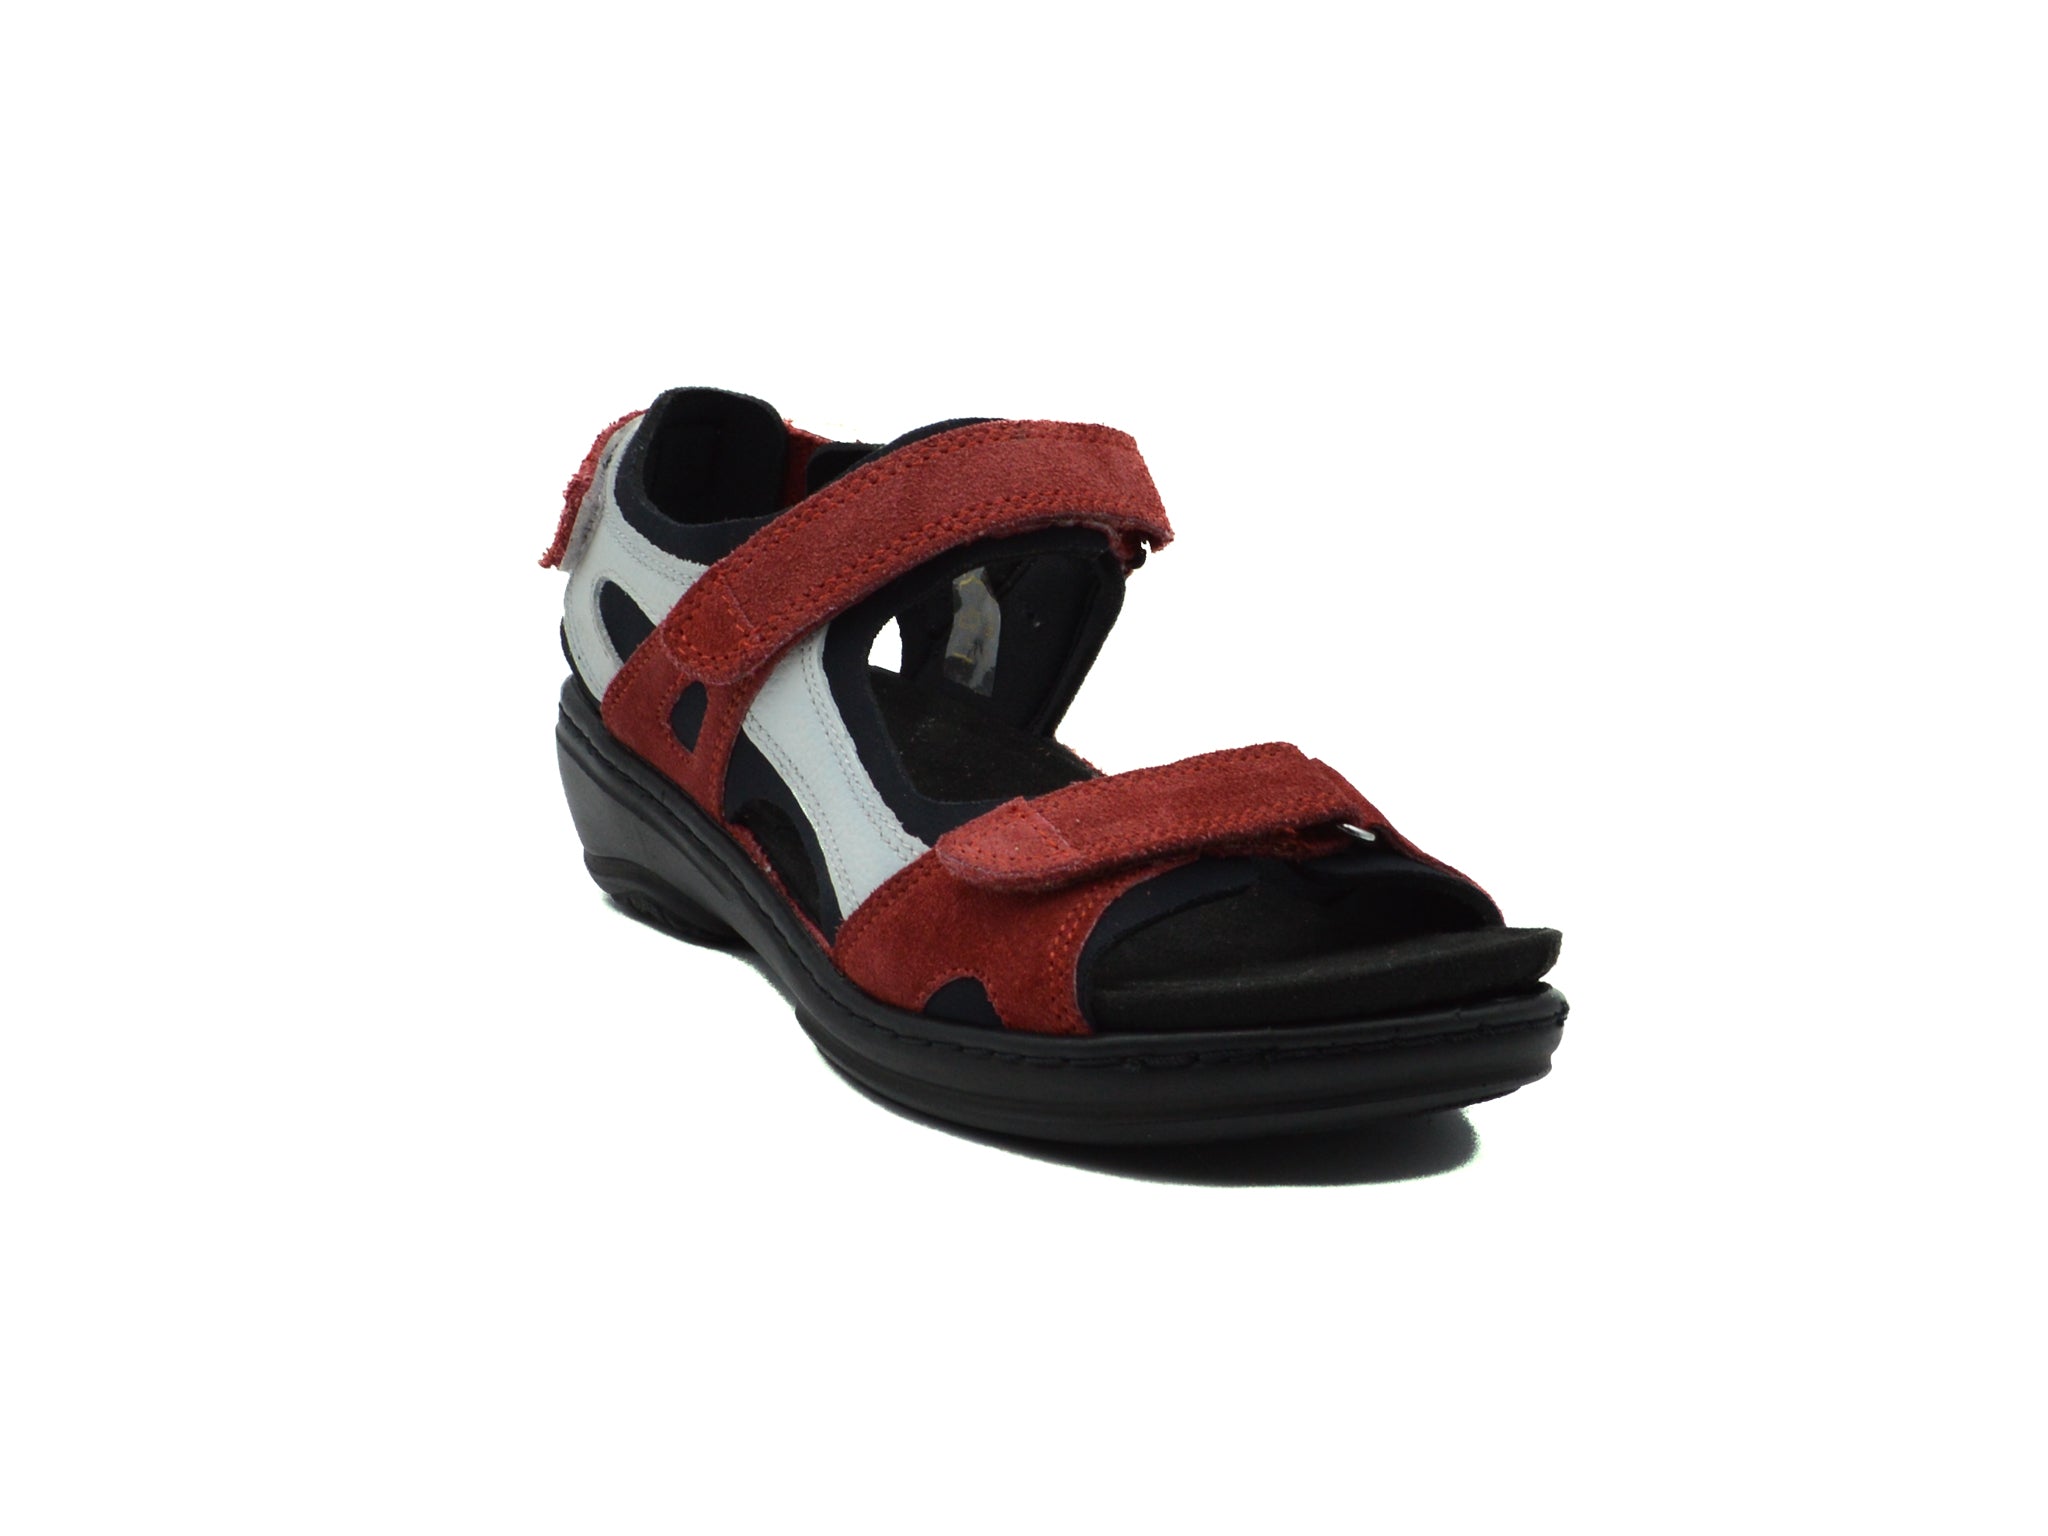 LELINTA Unisex Shoes for Women Printed Quick-Dry Swim Surf Socks Yoga Skin  Sports Beach Running Shoes 